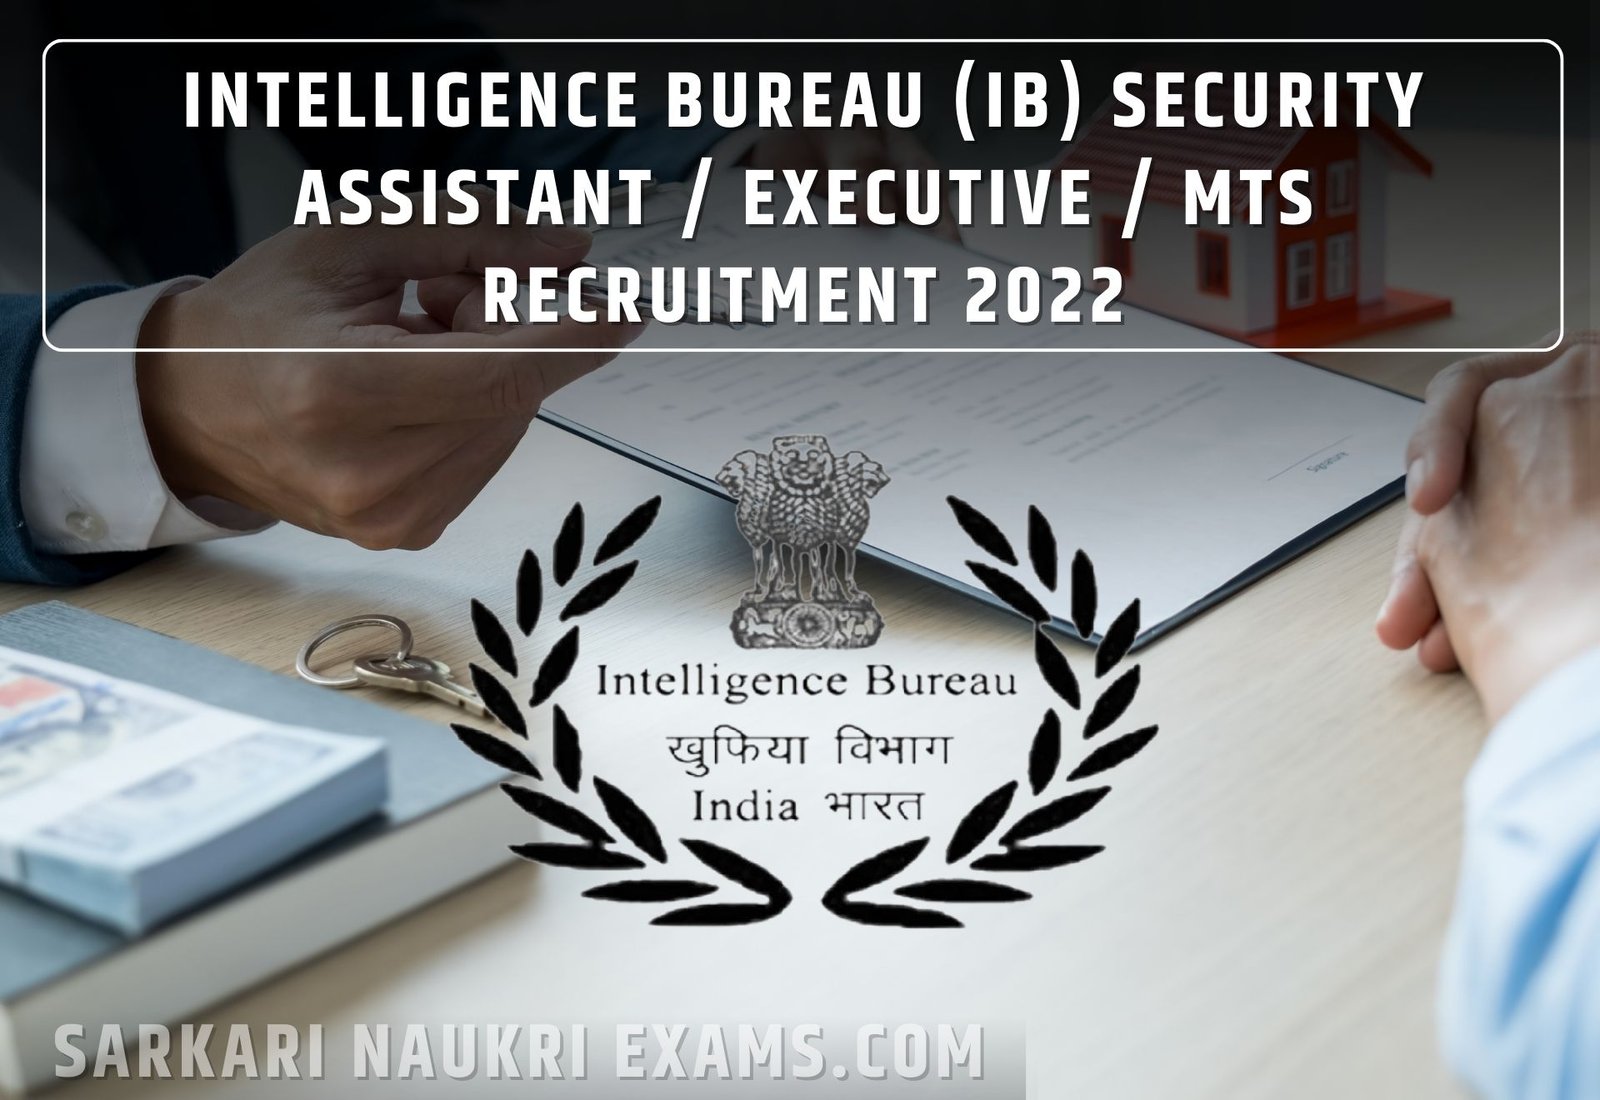 Intelligence Bureau (IB) Security Assistant / Executive / MTS Recruitment Form 2022 | 10th Pass Job